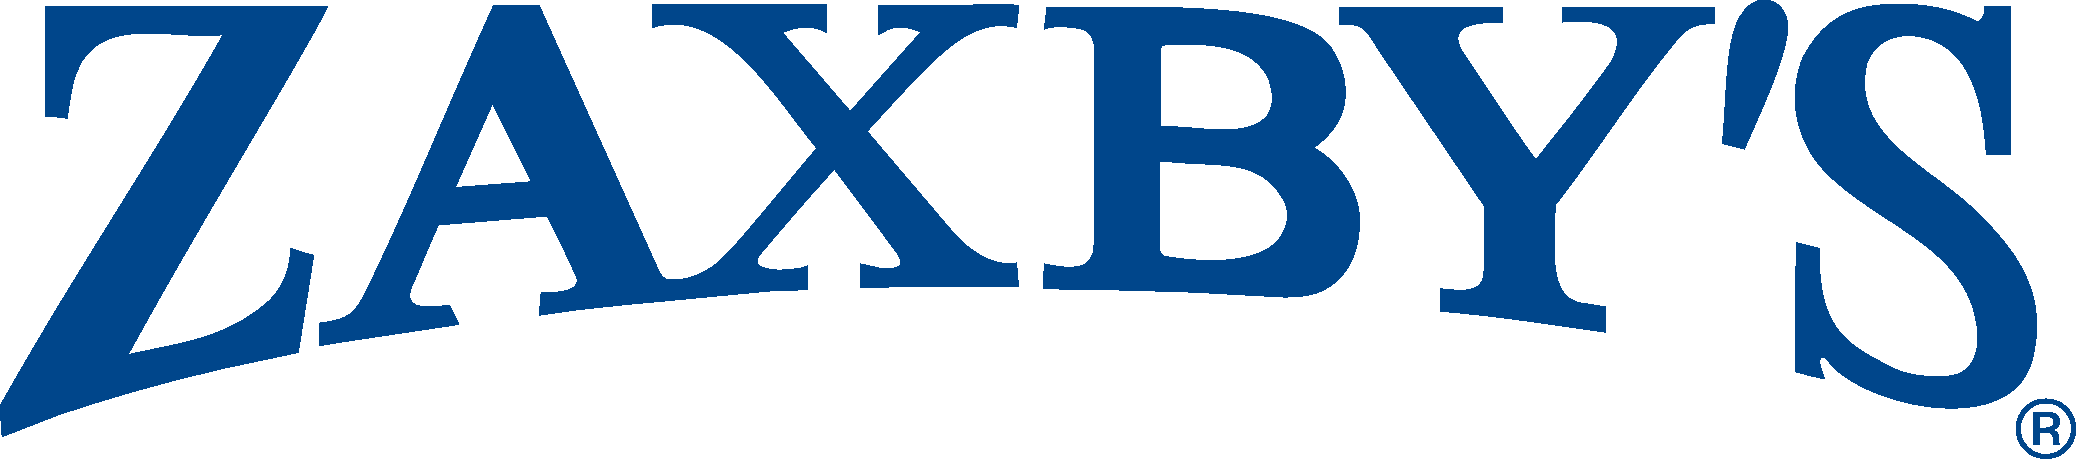 Zaxby's Logo - Zaxbys Logo Vector Free Download